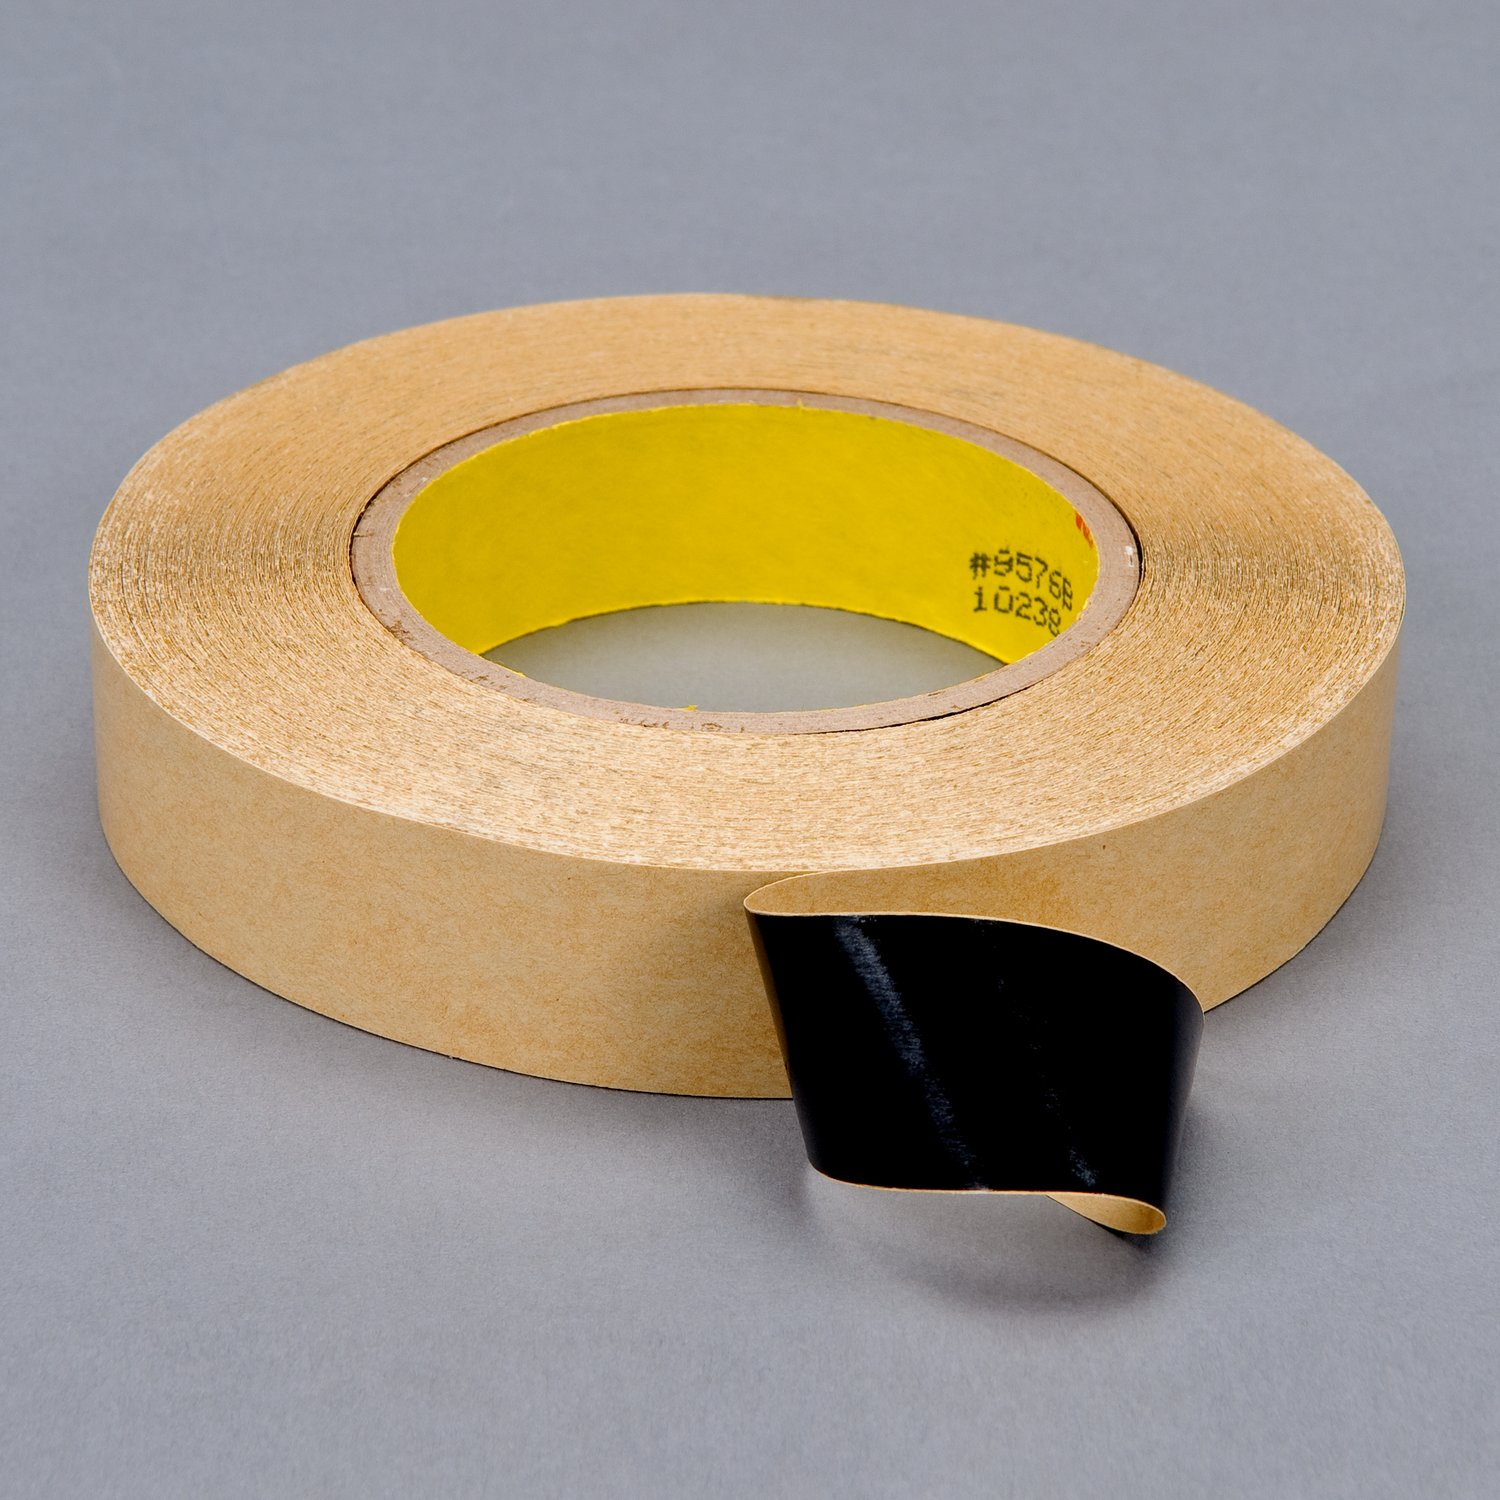 7100117047 - 3M Double Coated Tape 9576B, Black, 38 mm x 50 m, 4 mil, 24 rolls per
case